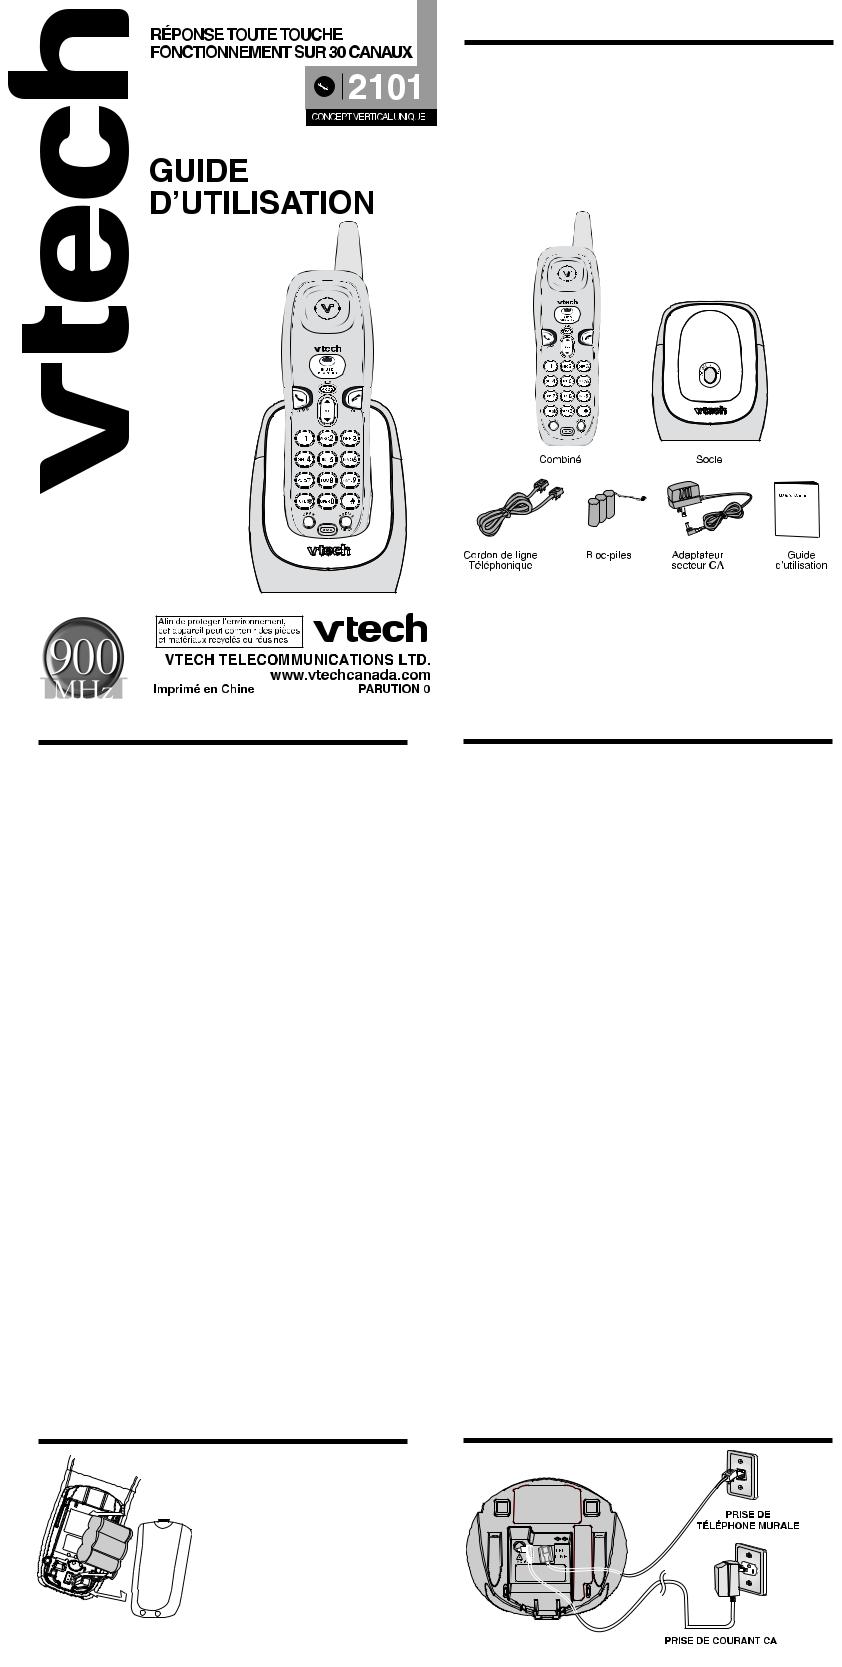 Vtech VT 2101 User Manual